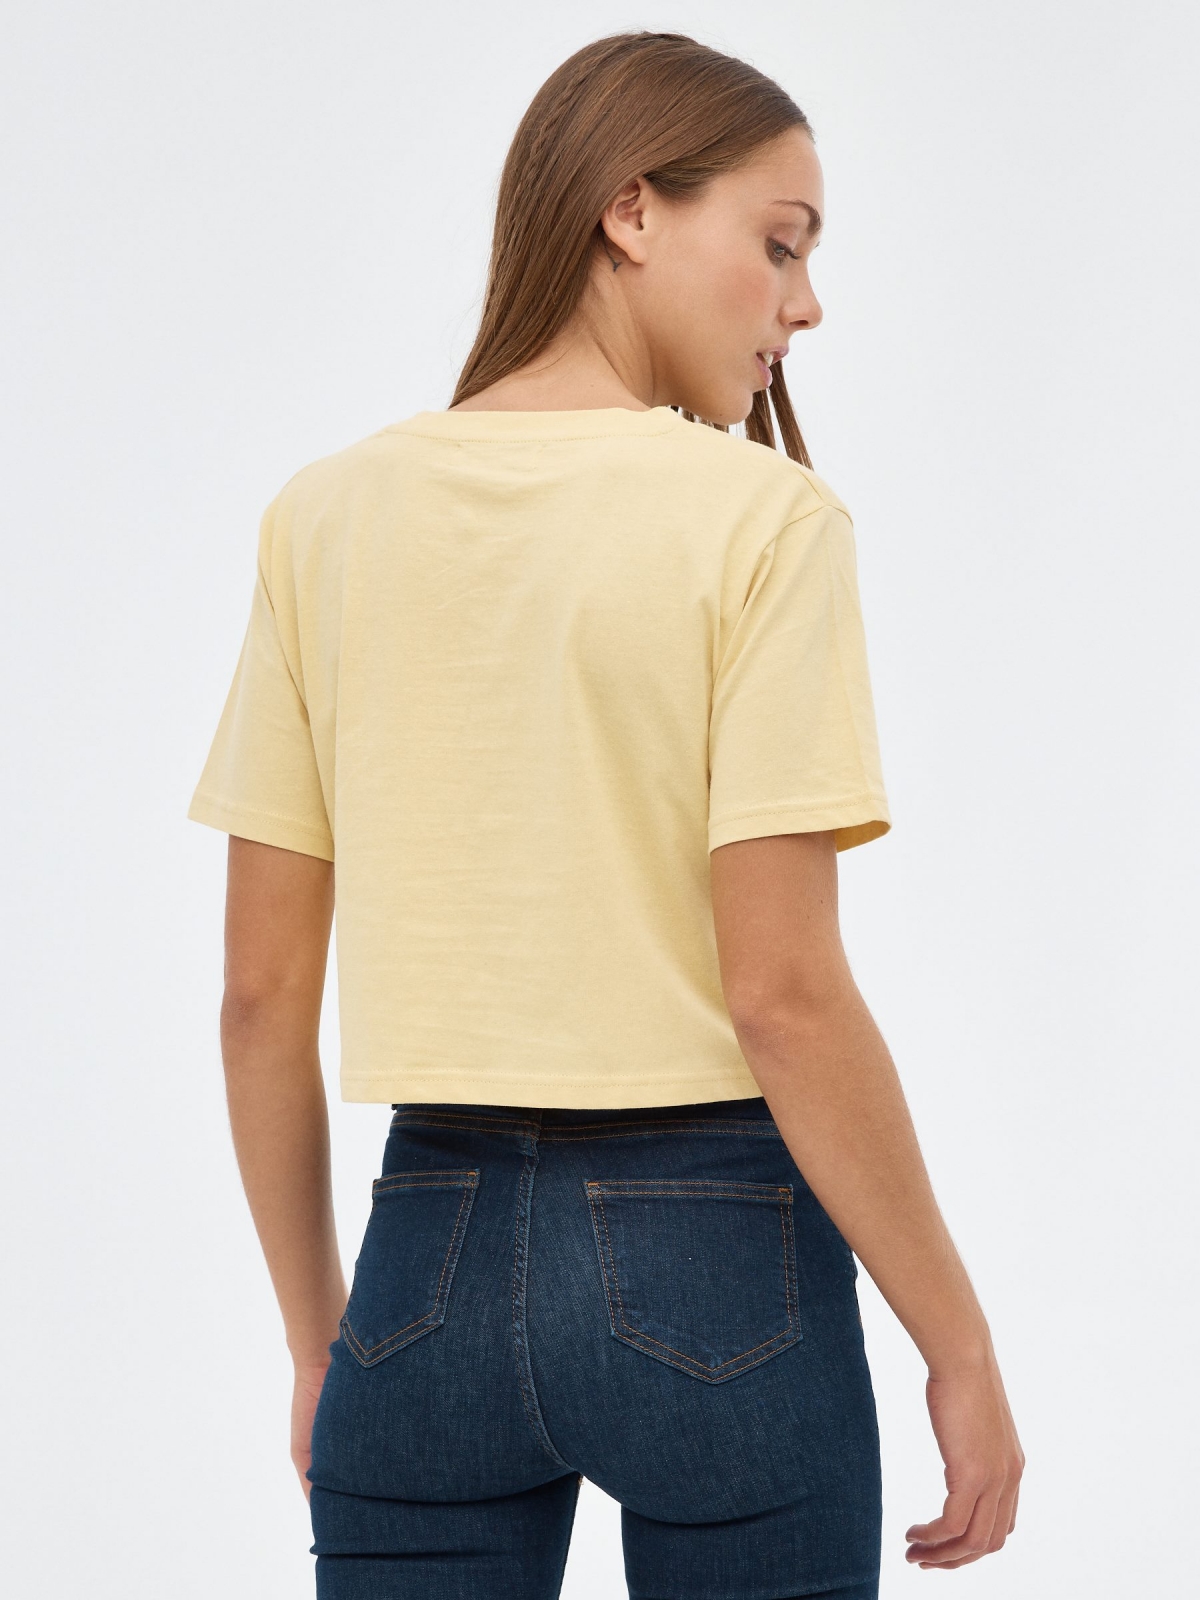 Camiseta crop morada amarillo pastel vista media trasera